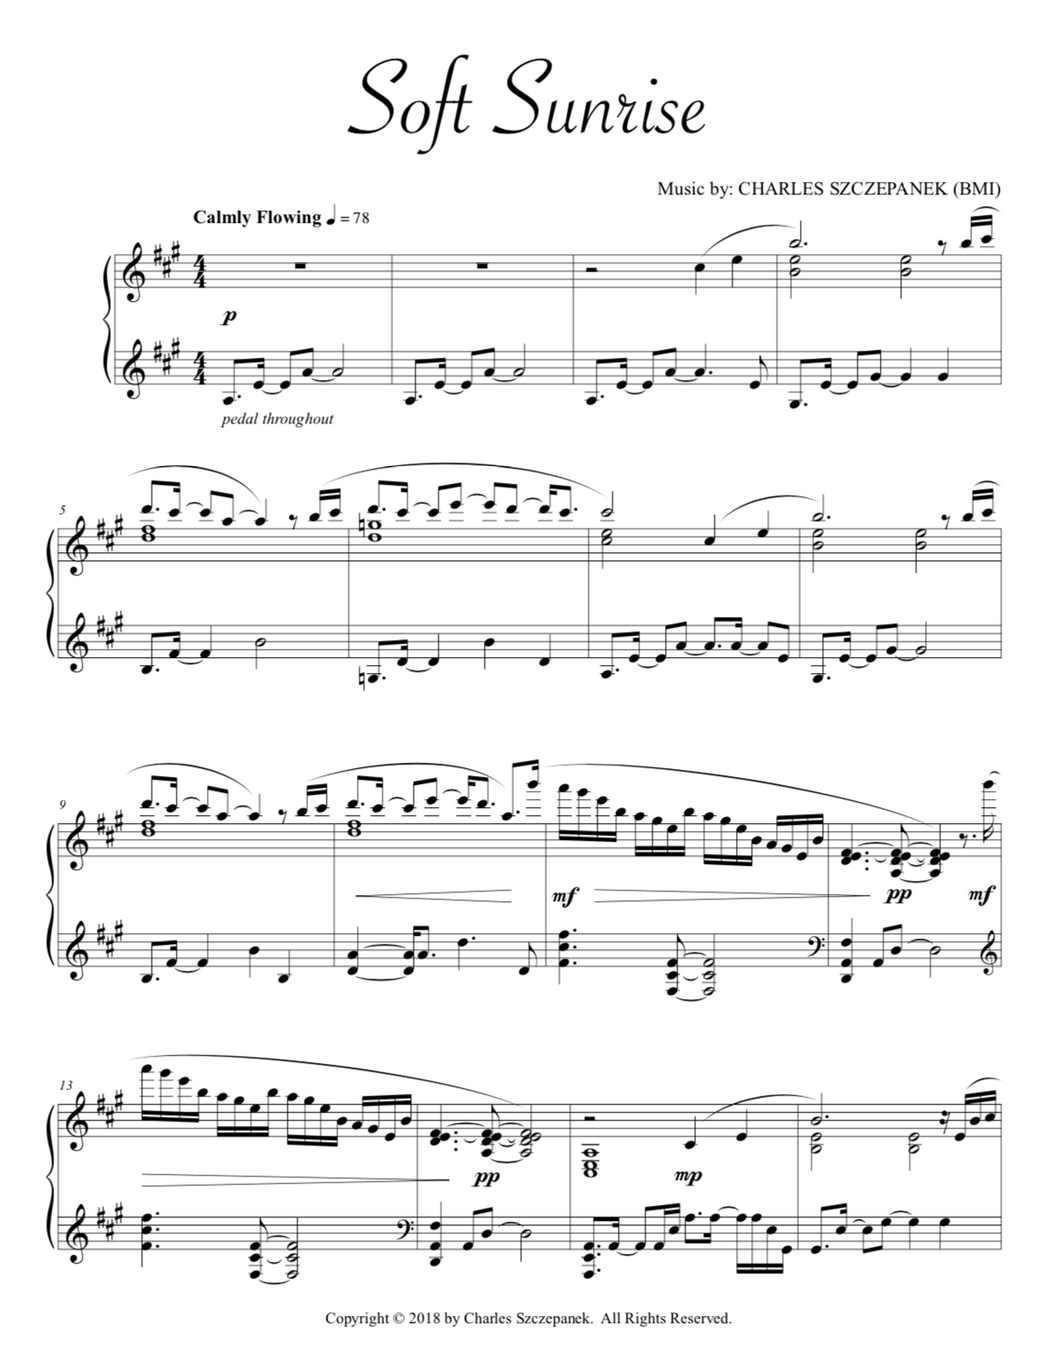 Soft Sunrise-Sheet Music for Solo Piano